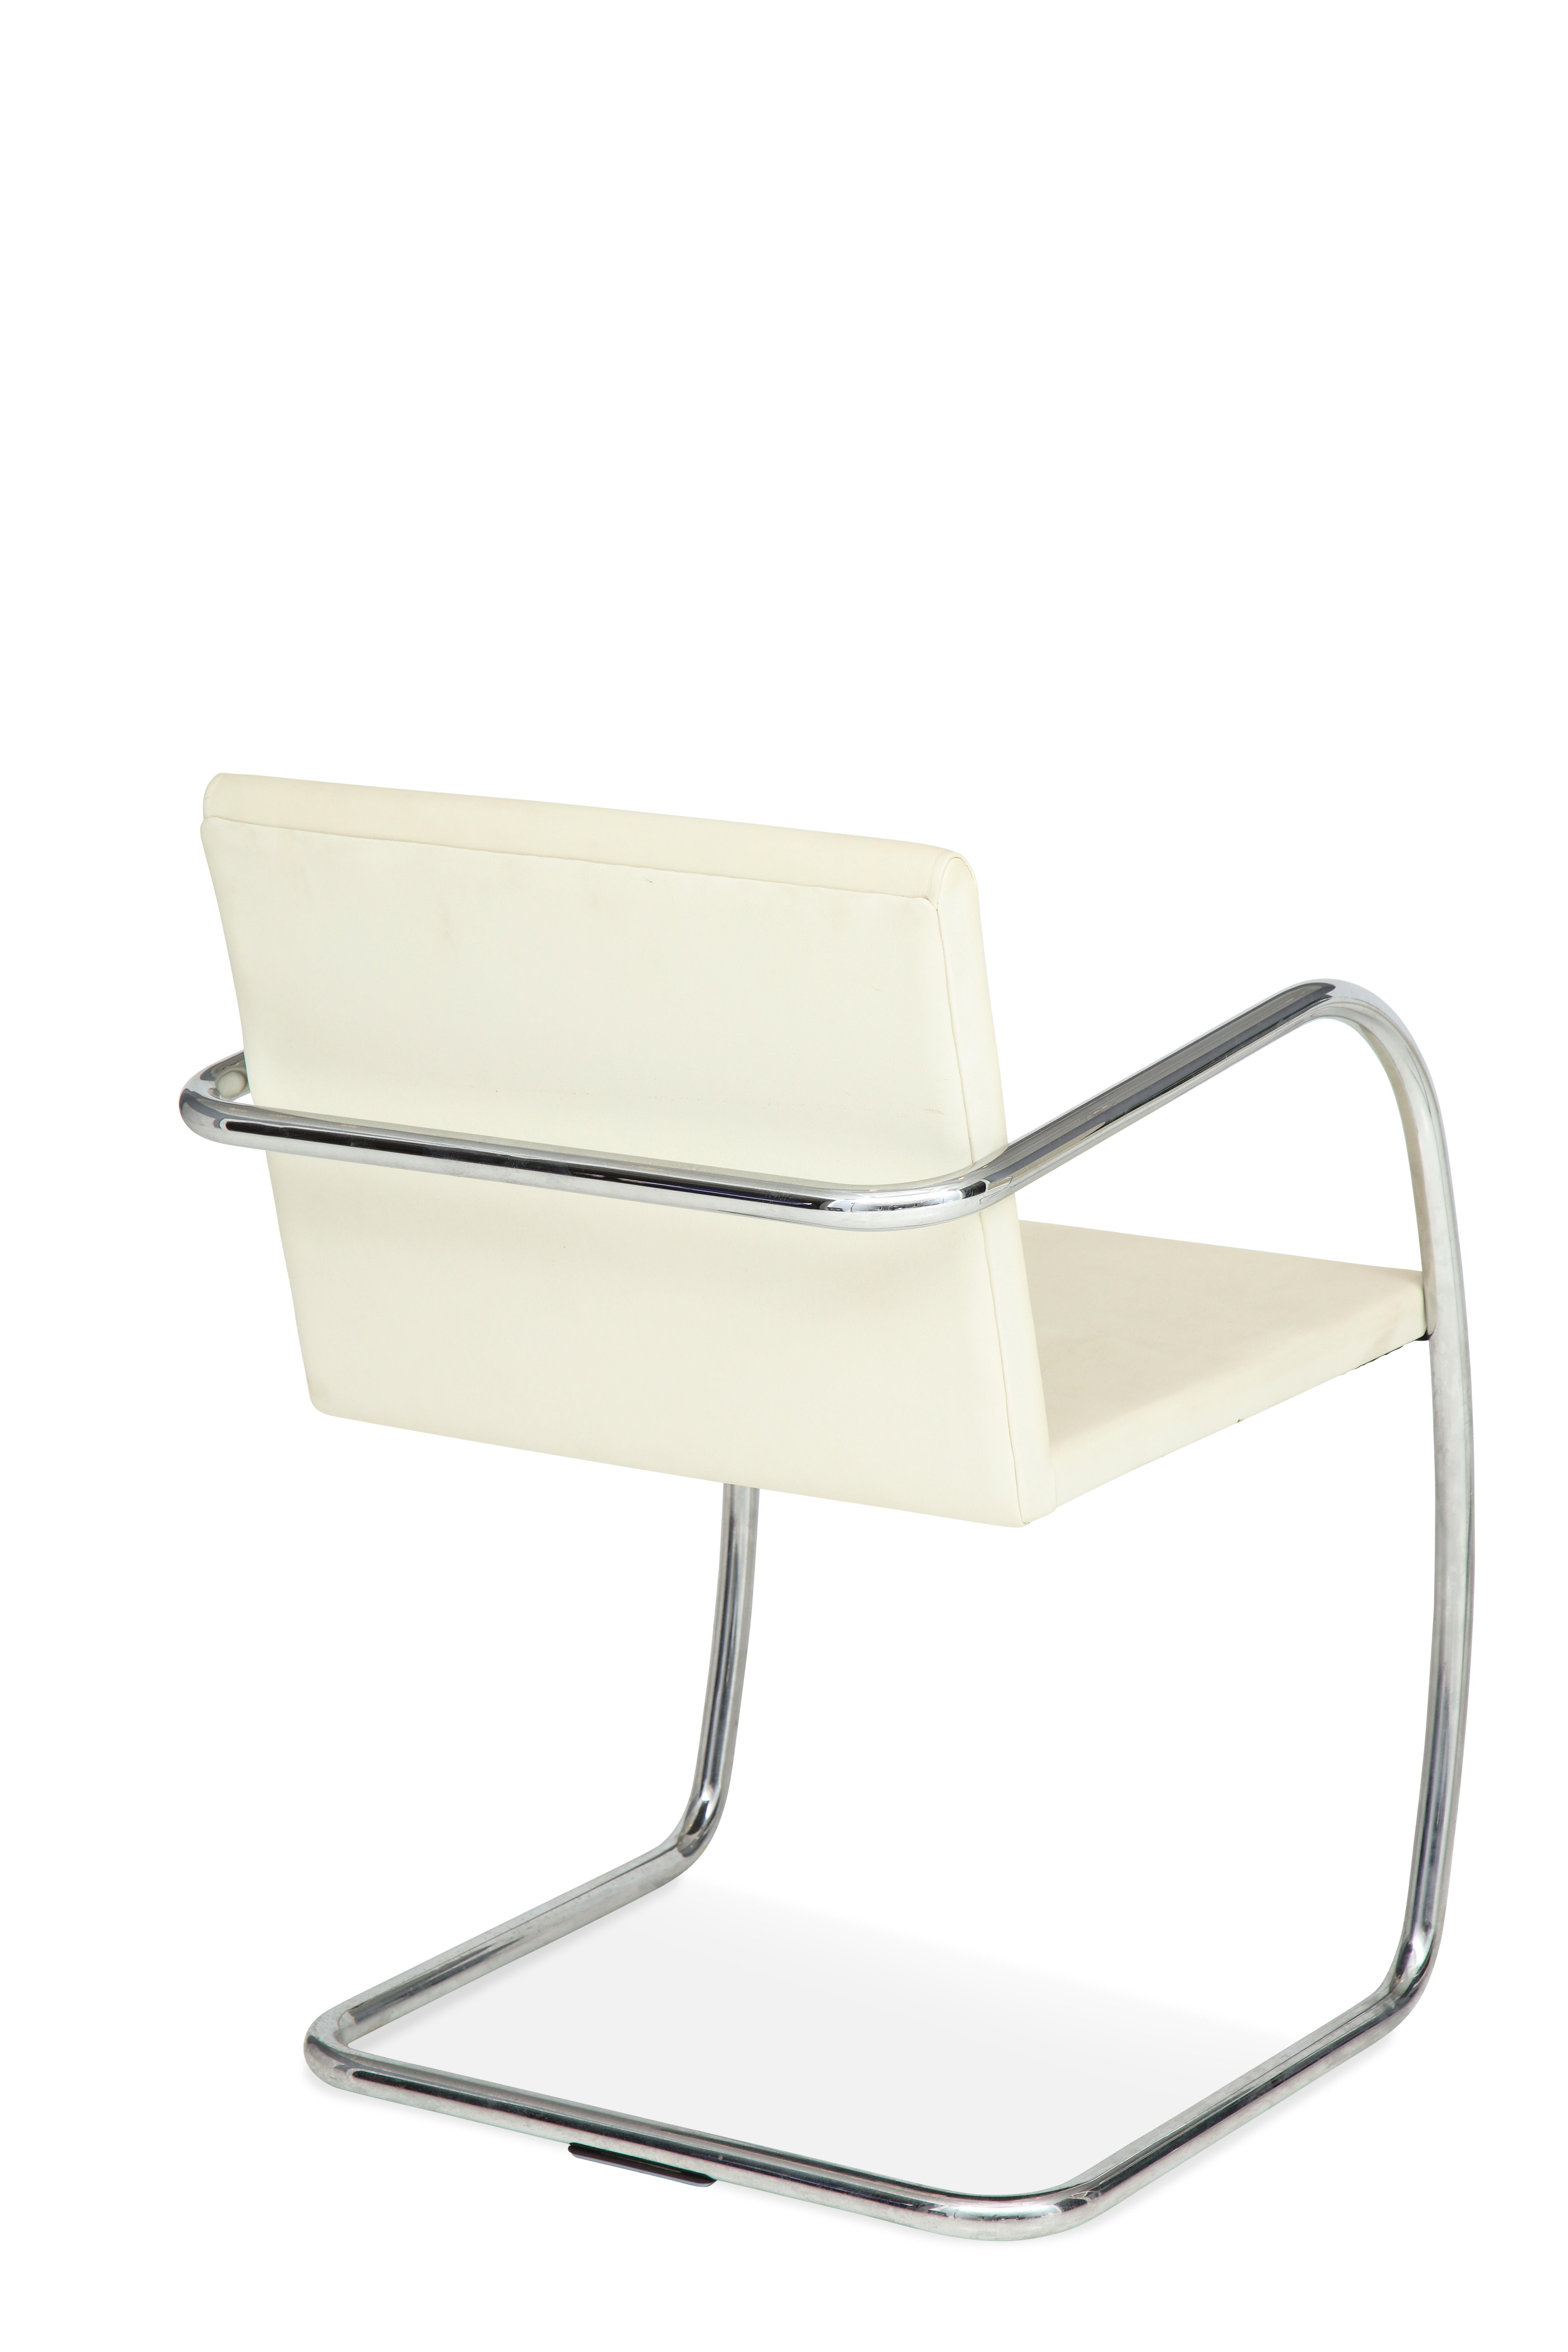 American Set of 4 Mies van der Rohe for Knoll Tubular Brno Chairs